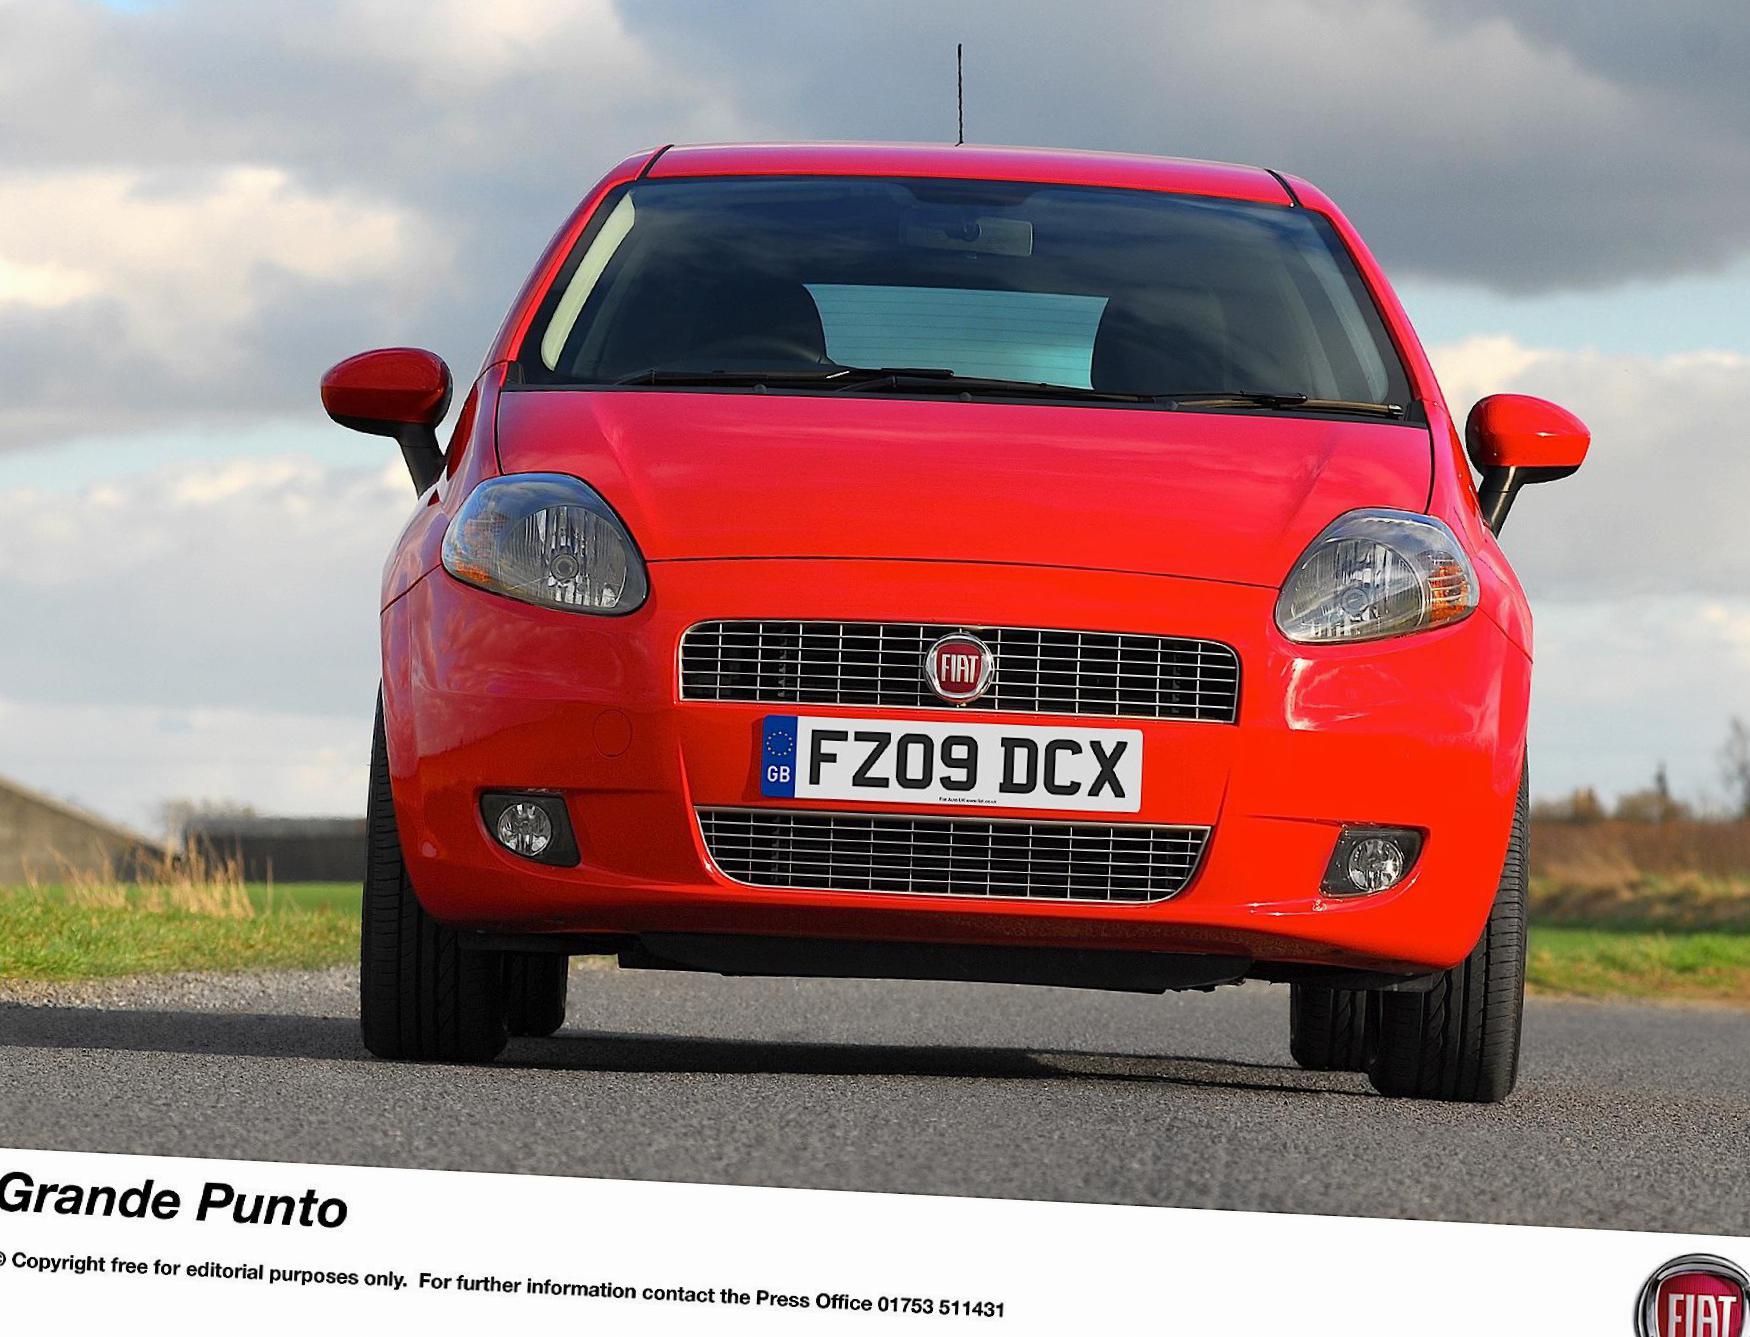 Punto Evo 3 doors Fiat Characteristics 2010